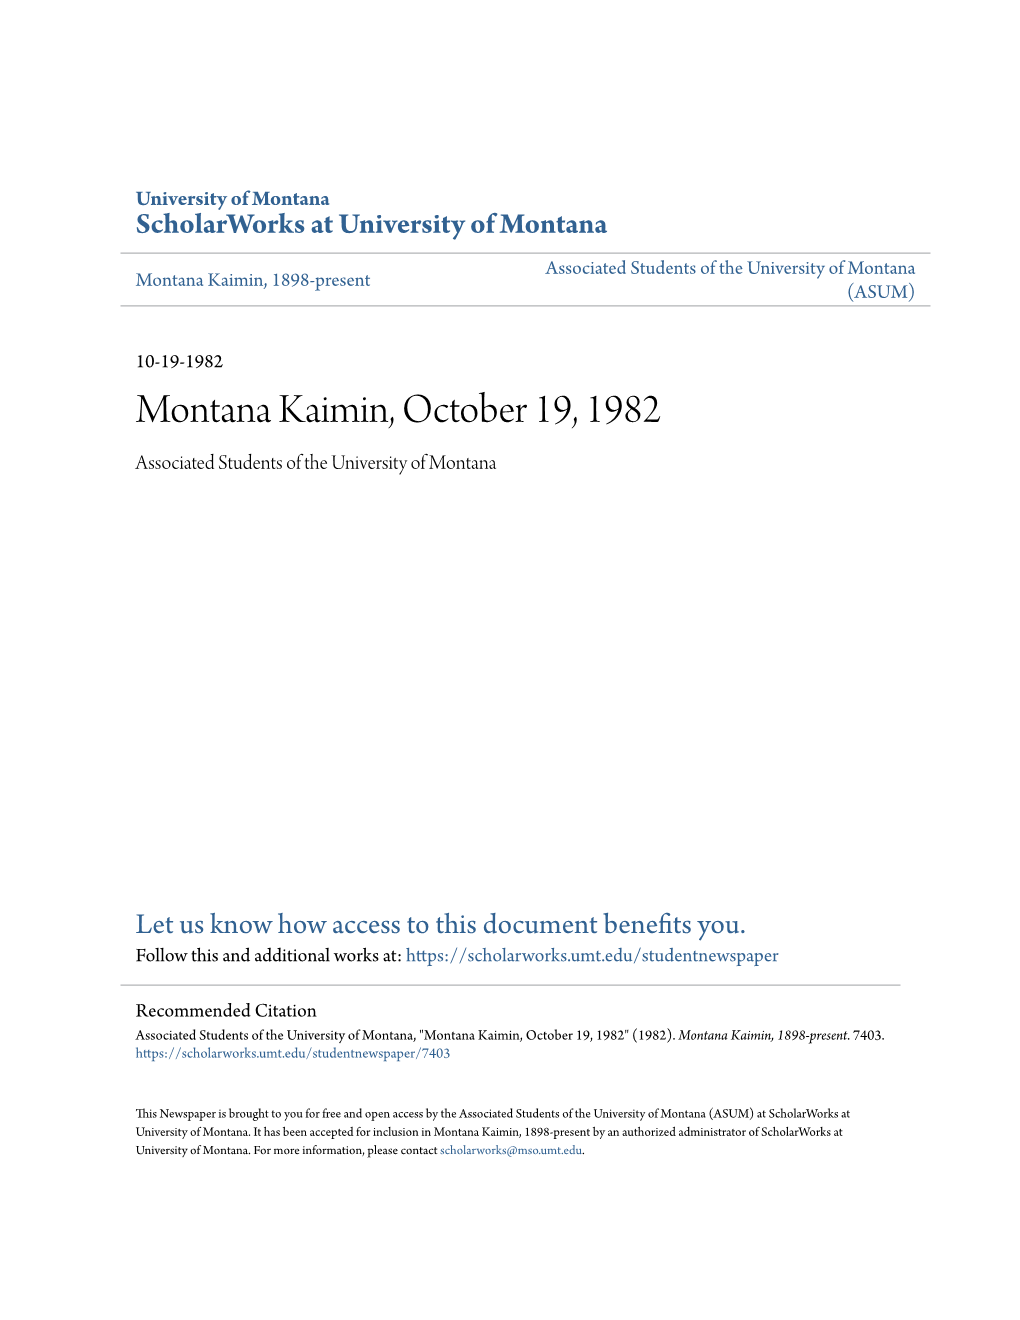 Montana Kaimin, October 19, 1982 Associated Students of the University of Montana